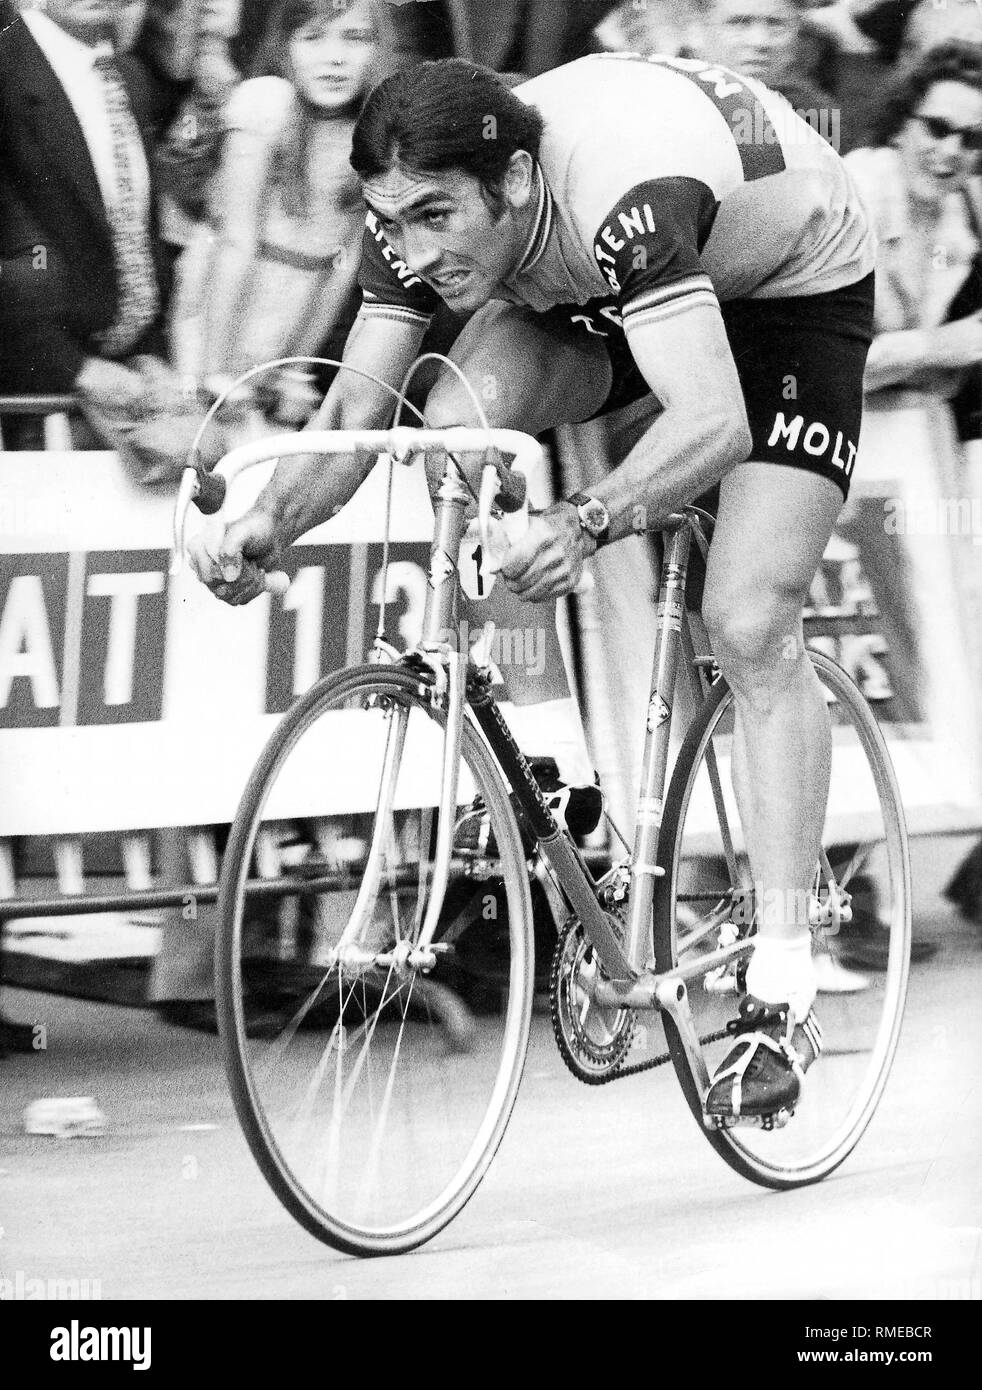 Eddy merckx screen paper